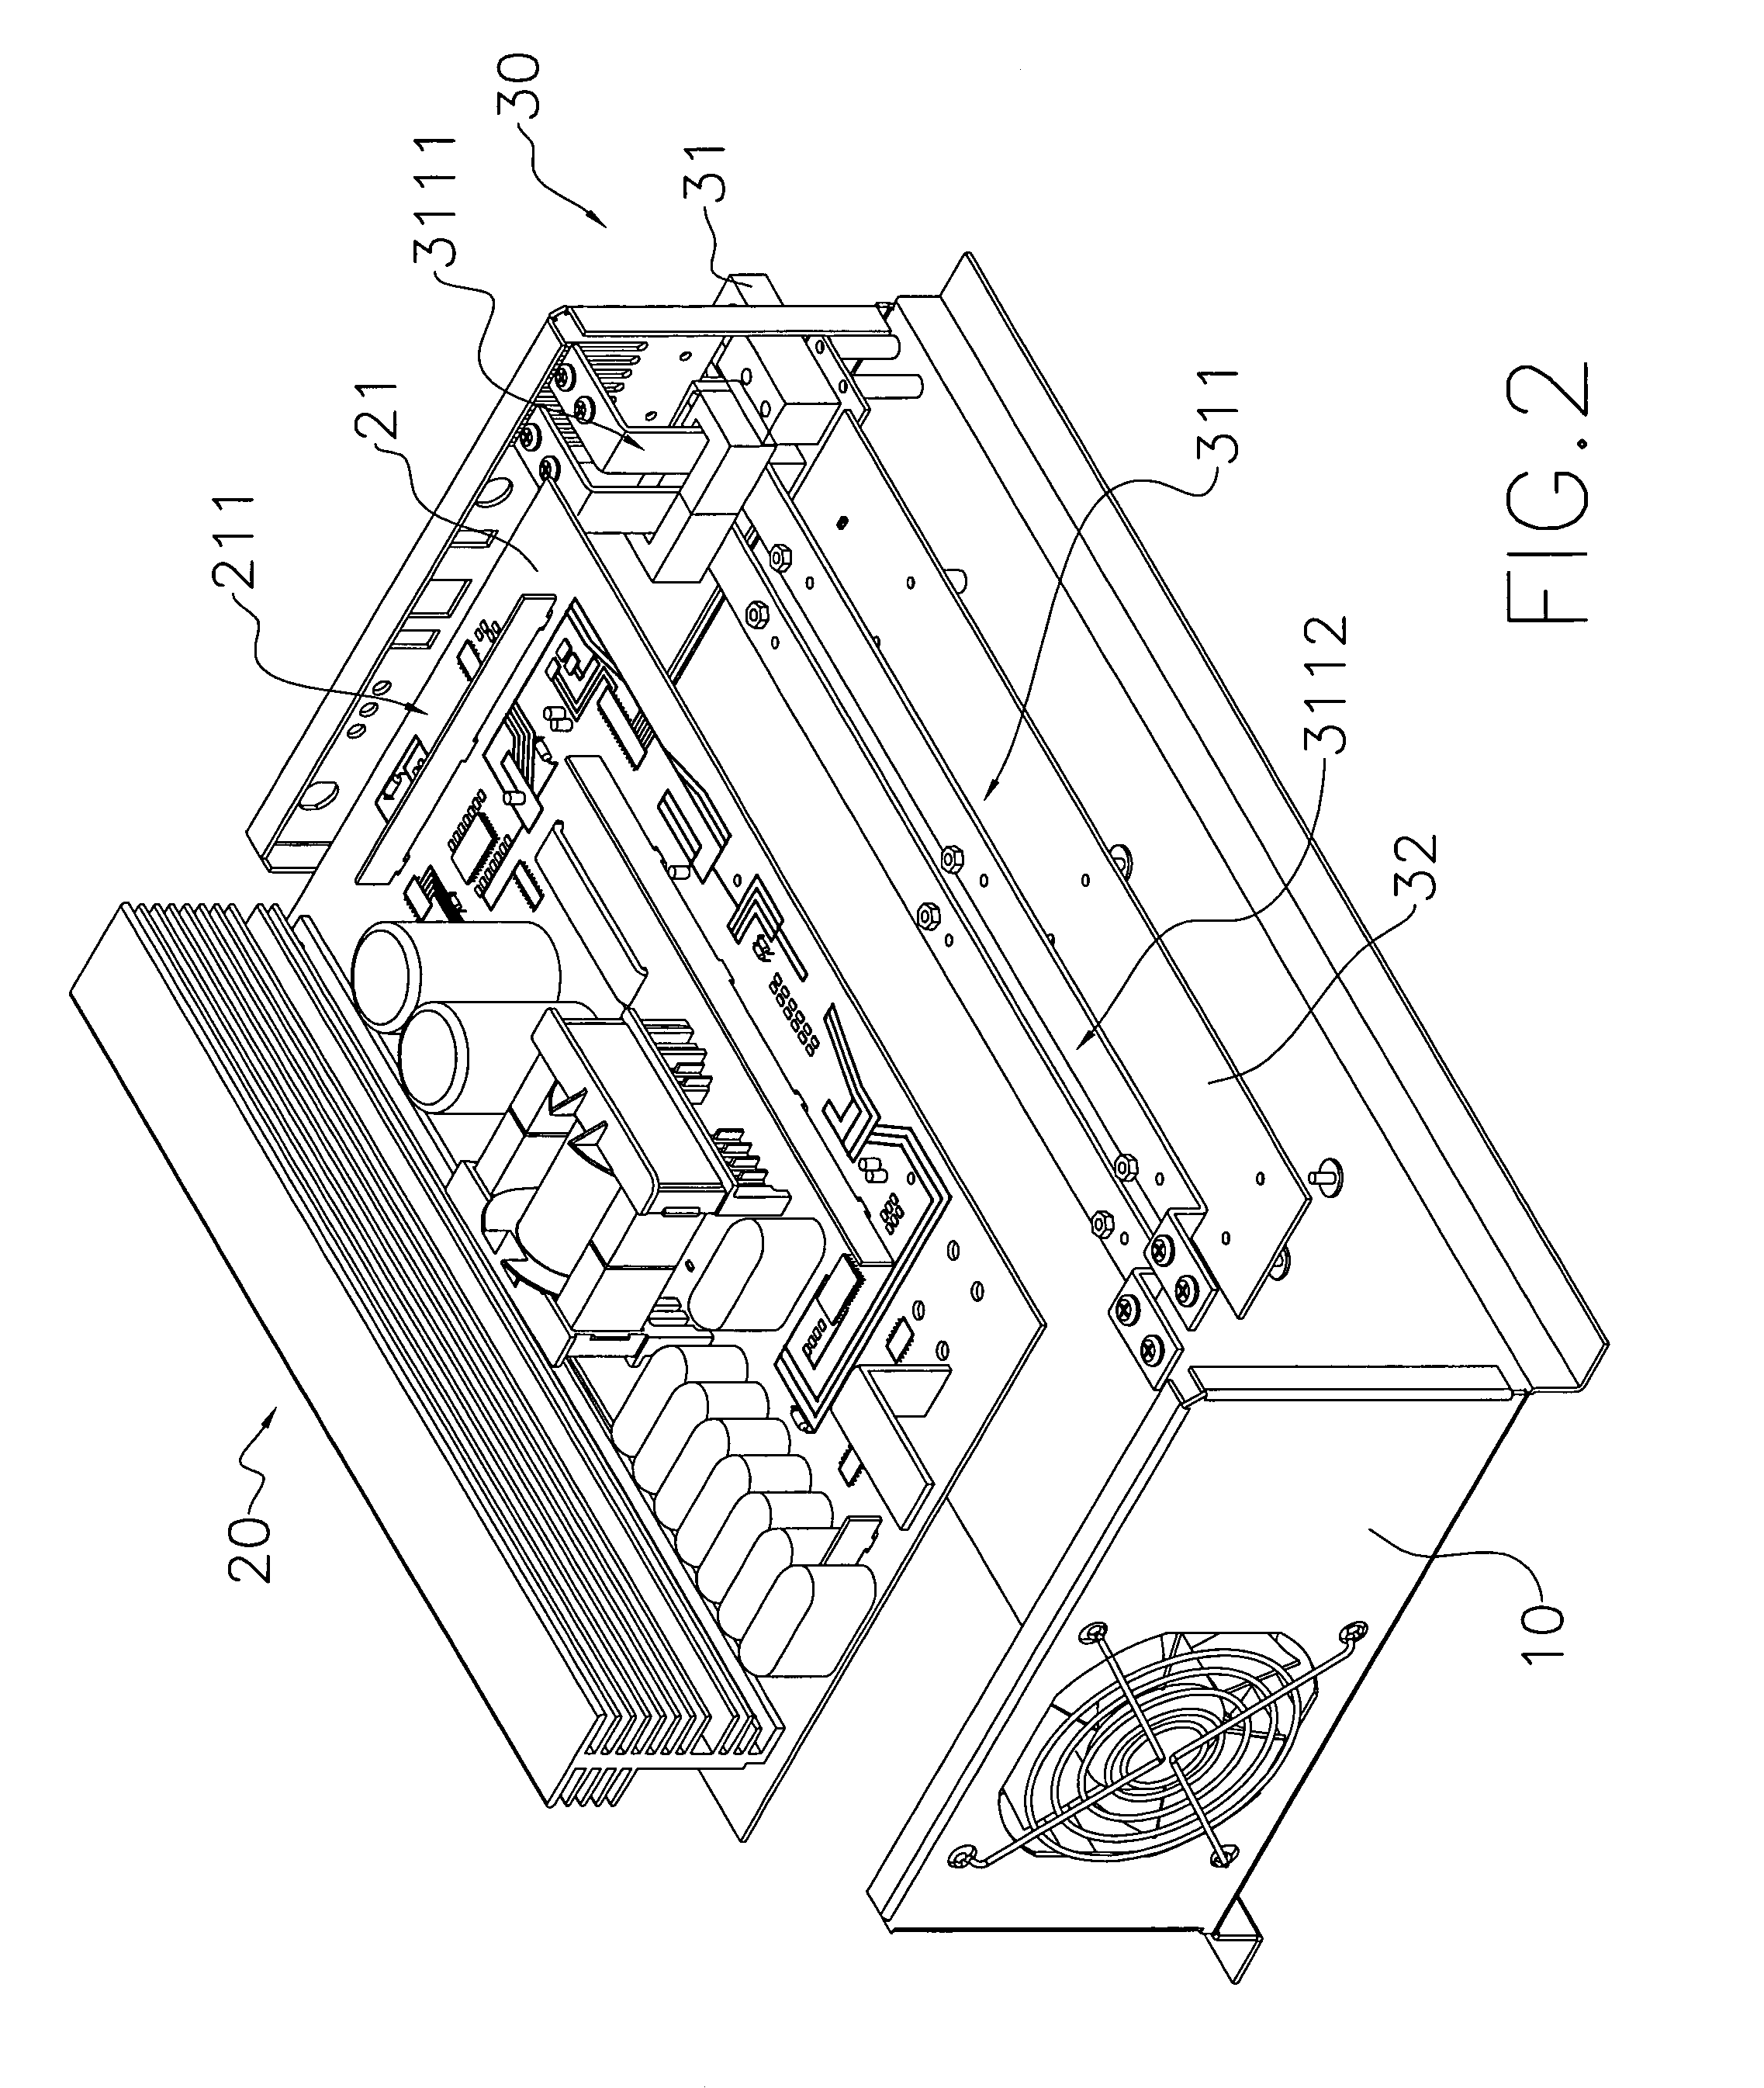 Insulating arrangement for DC/AC inverter